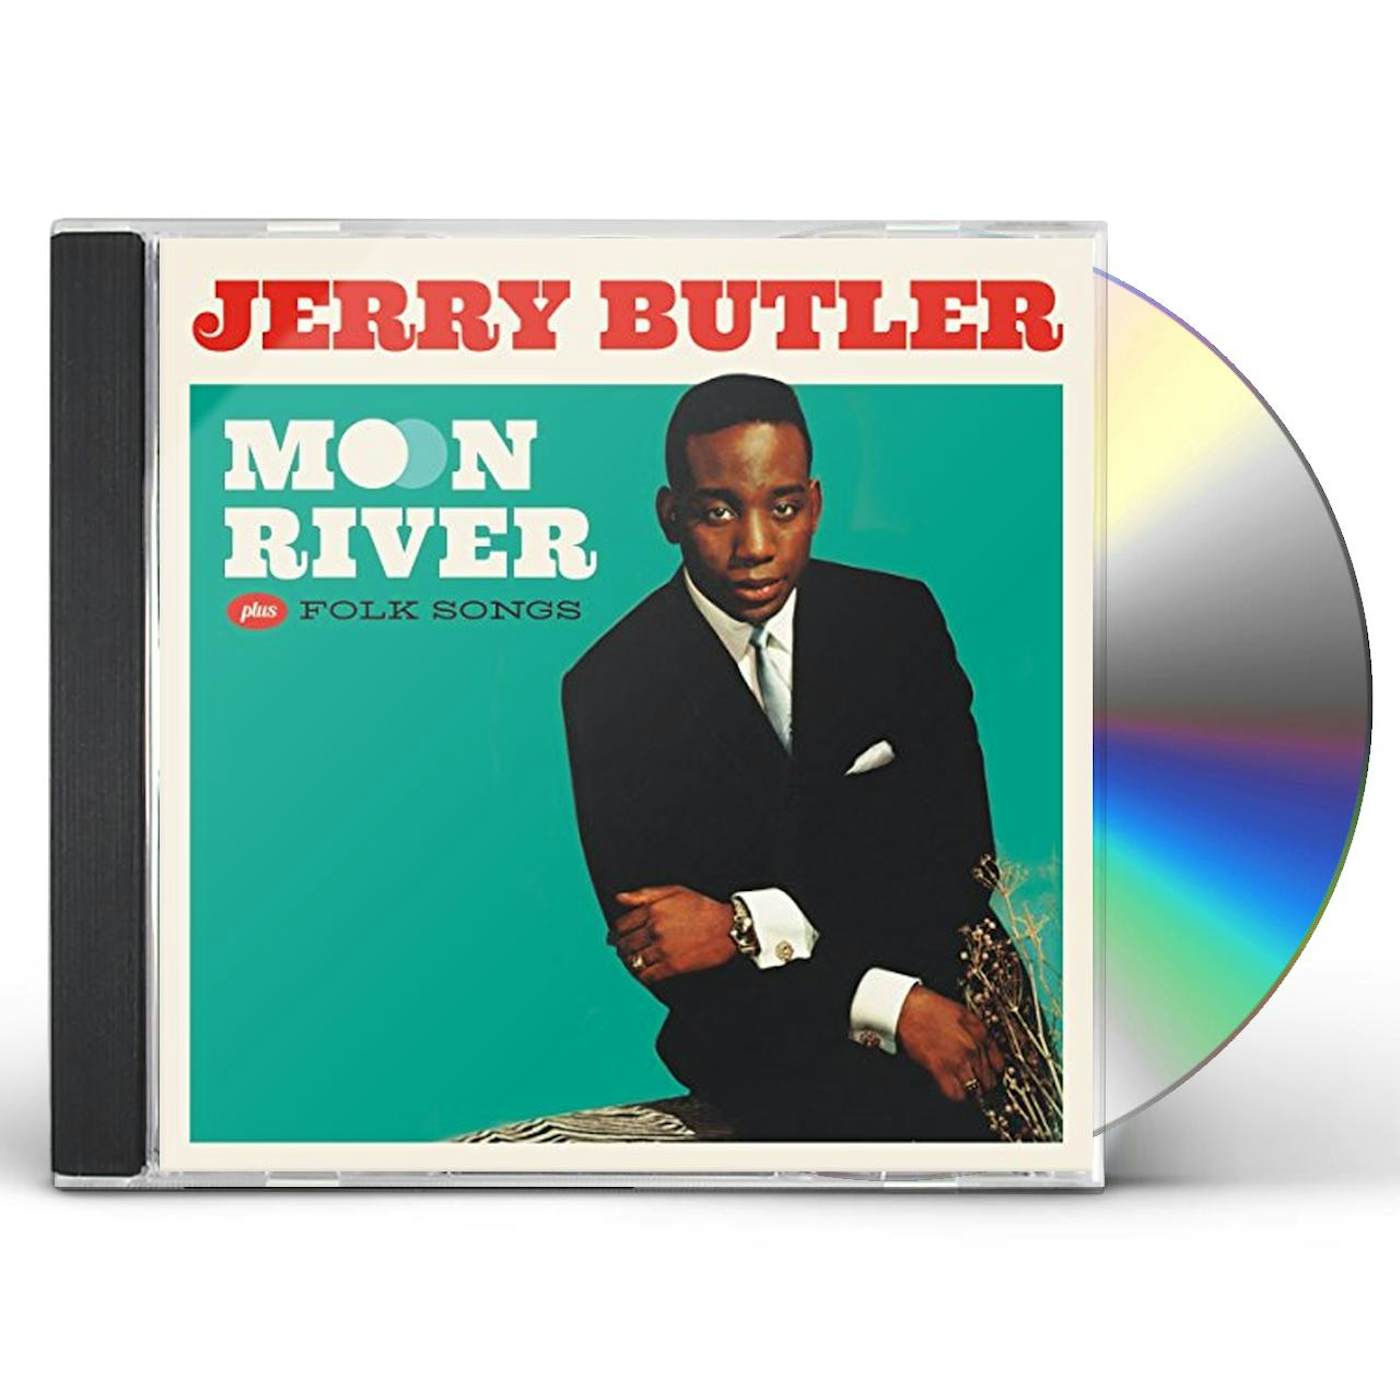 Jerry Butler MOON RIVER / FOLK SONGS CD